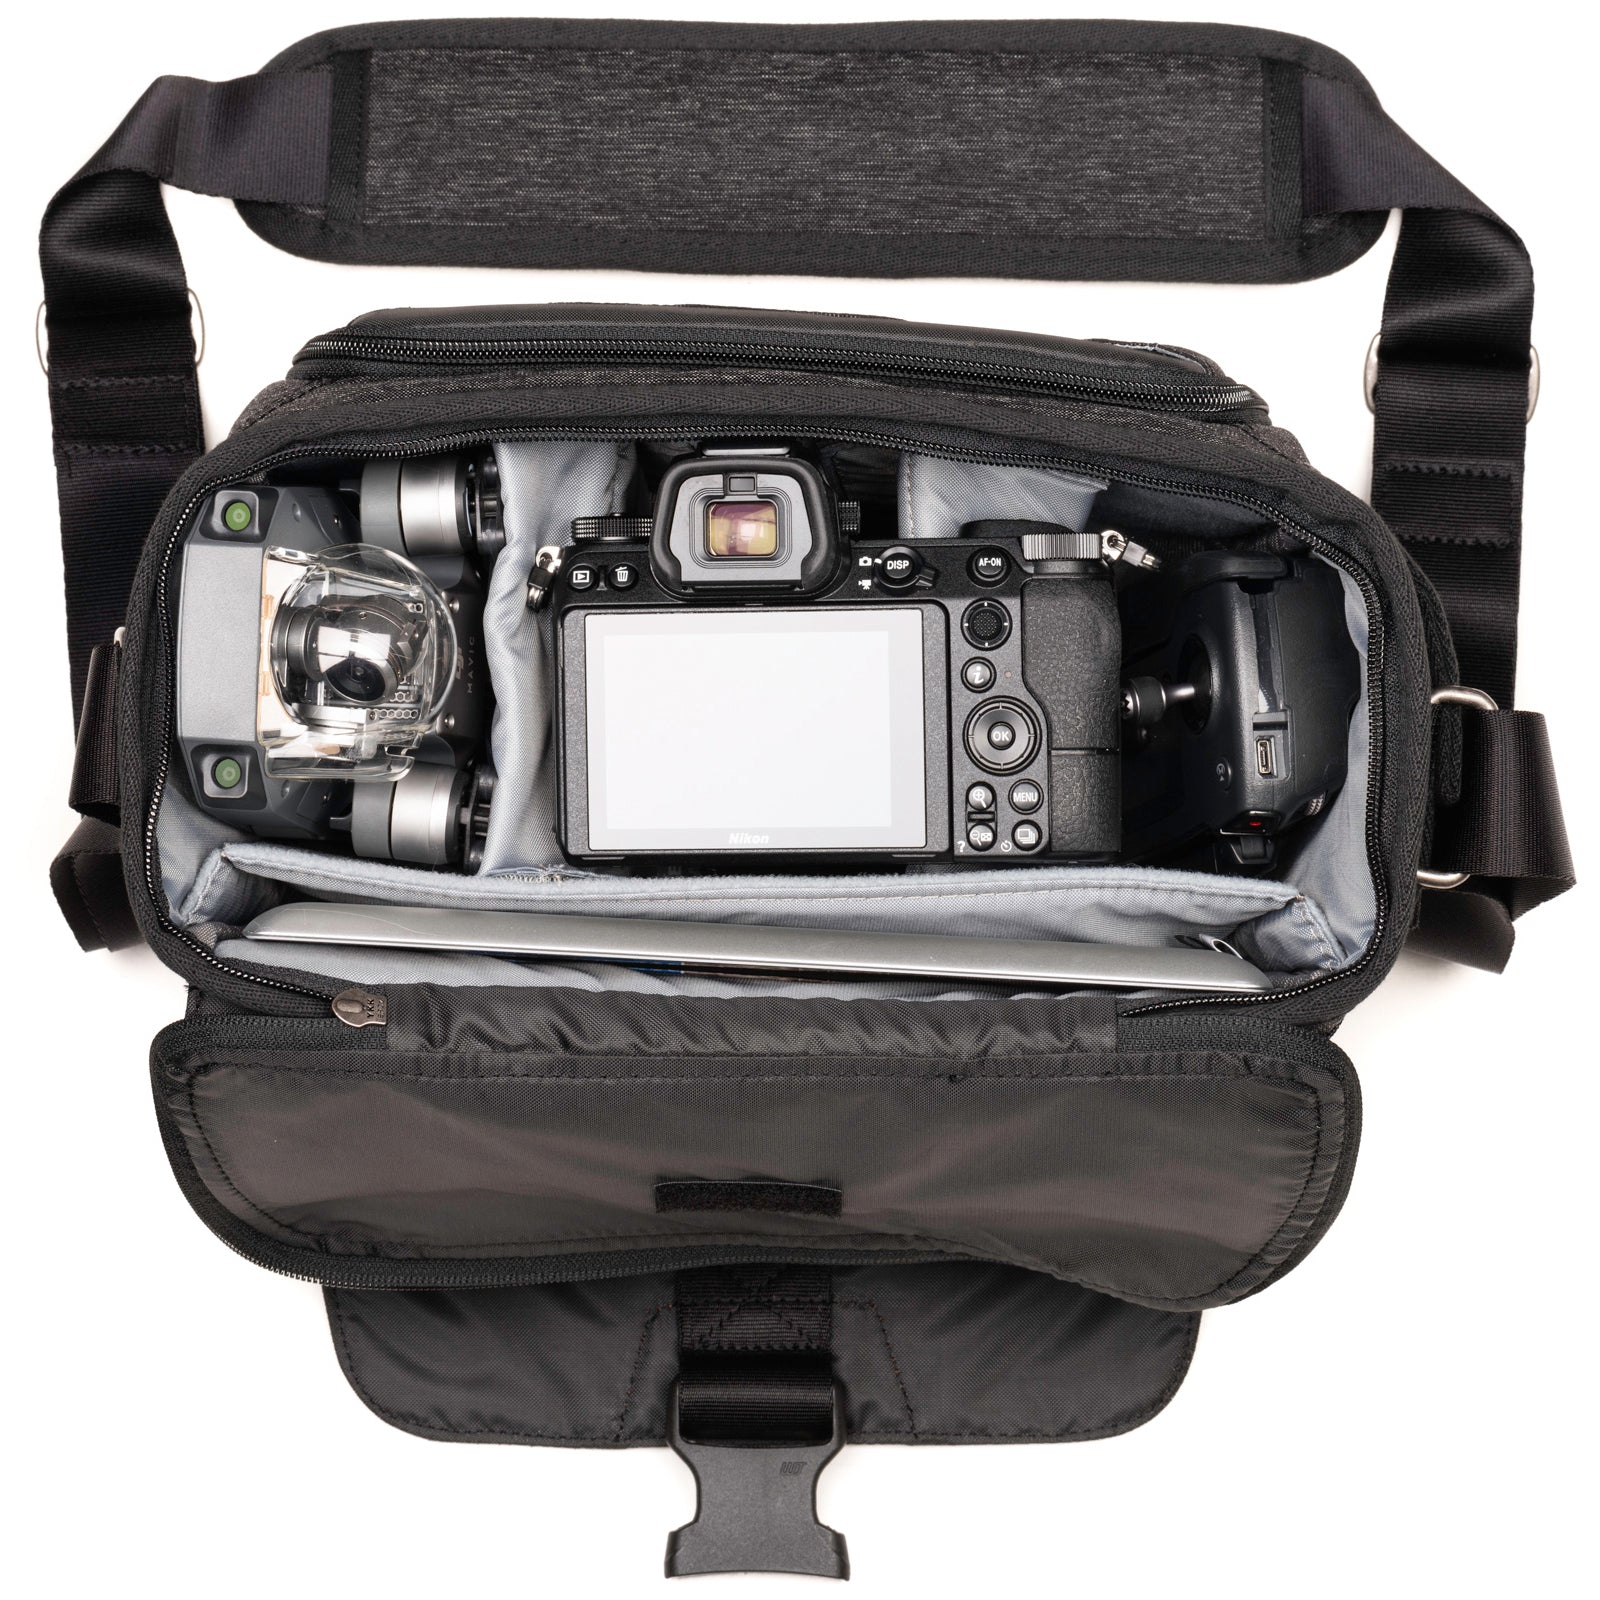 Nikon mirrorless Z6 including 24-70mm f/4, DJI Mavic drone with controller